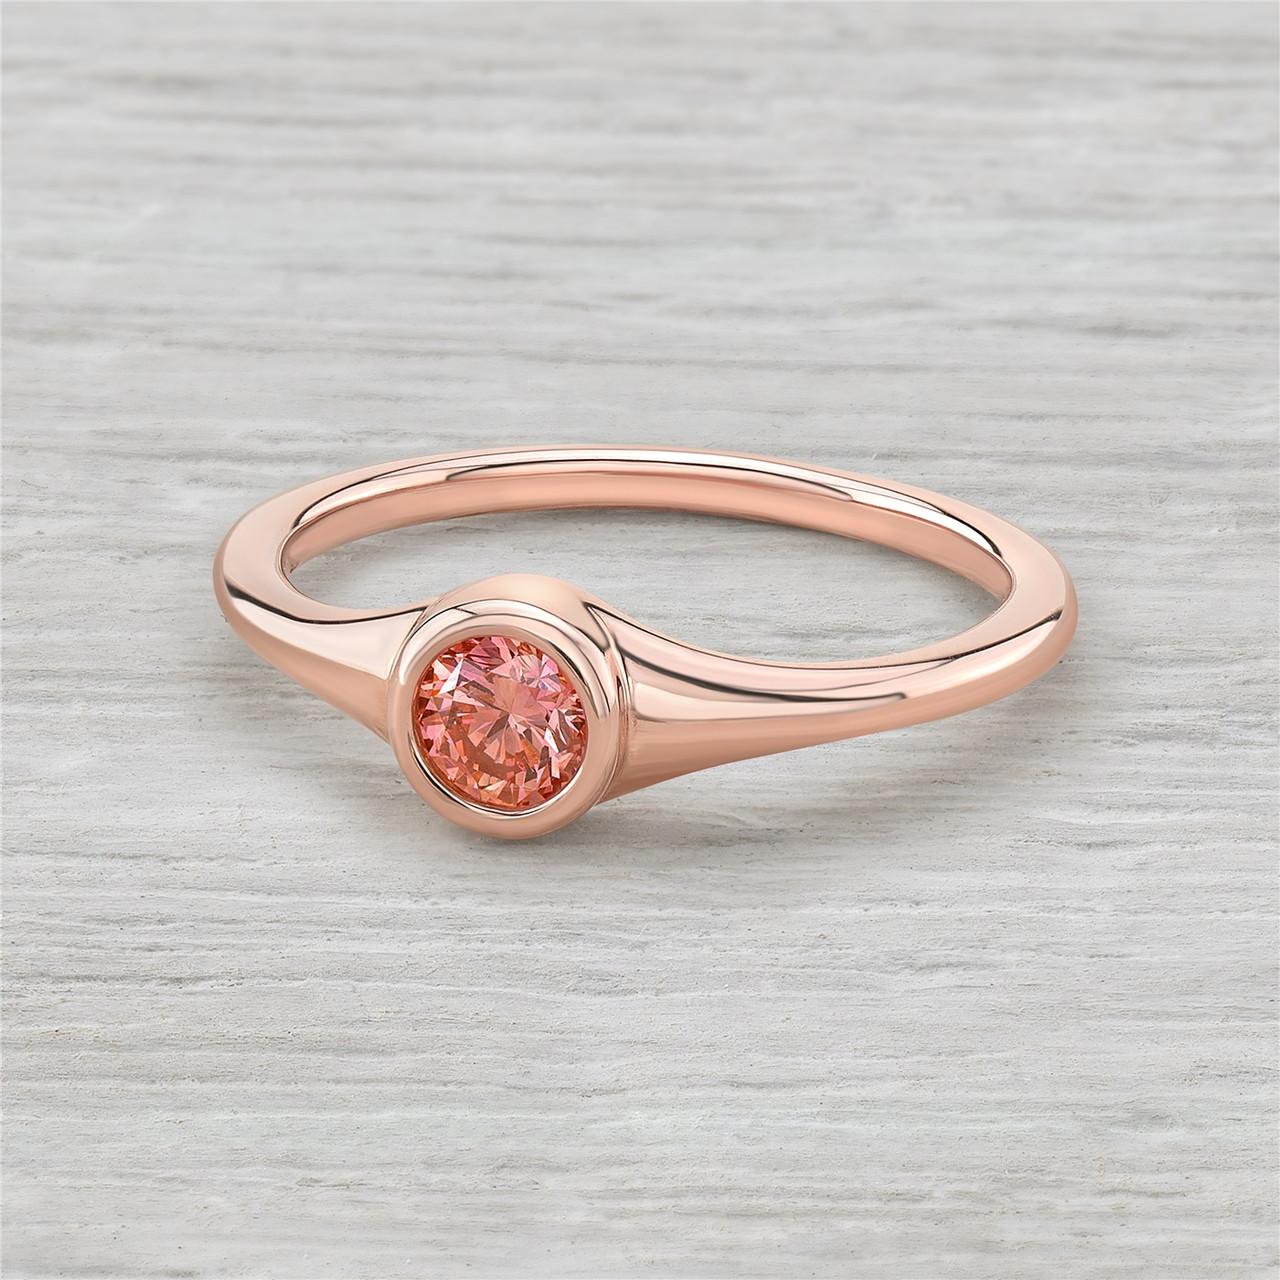 Pink Diamond Bezel Set Ring in 14K Rose Gold (only $875)